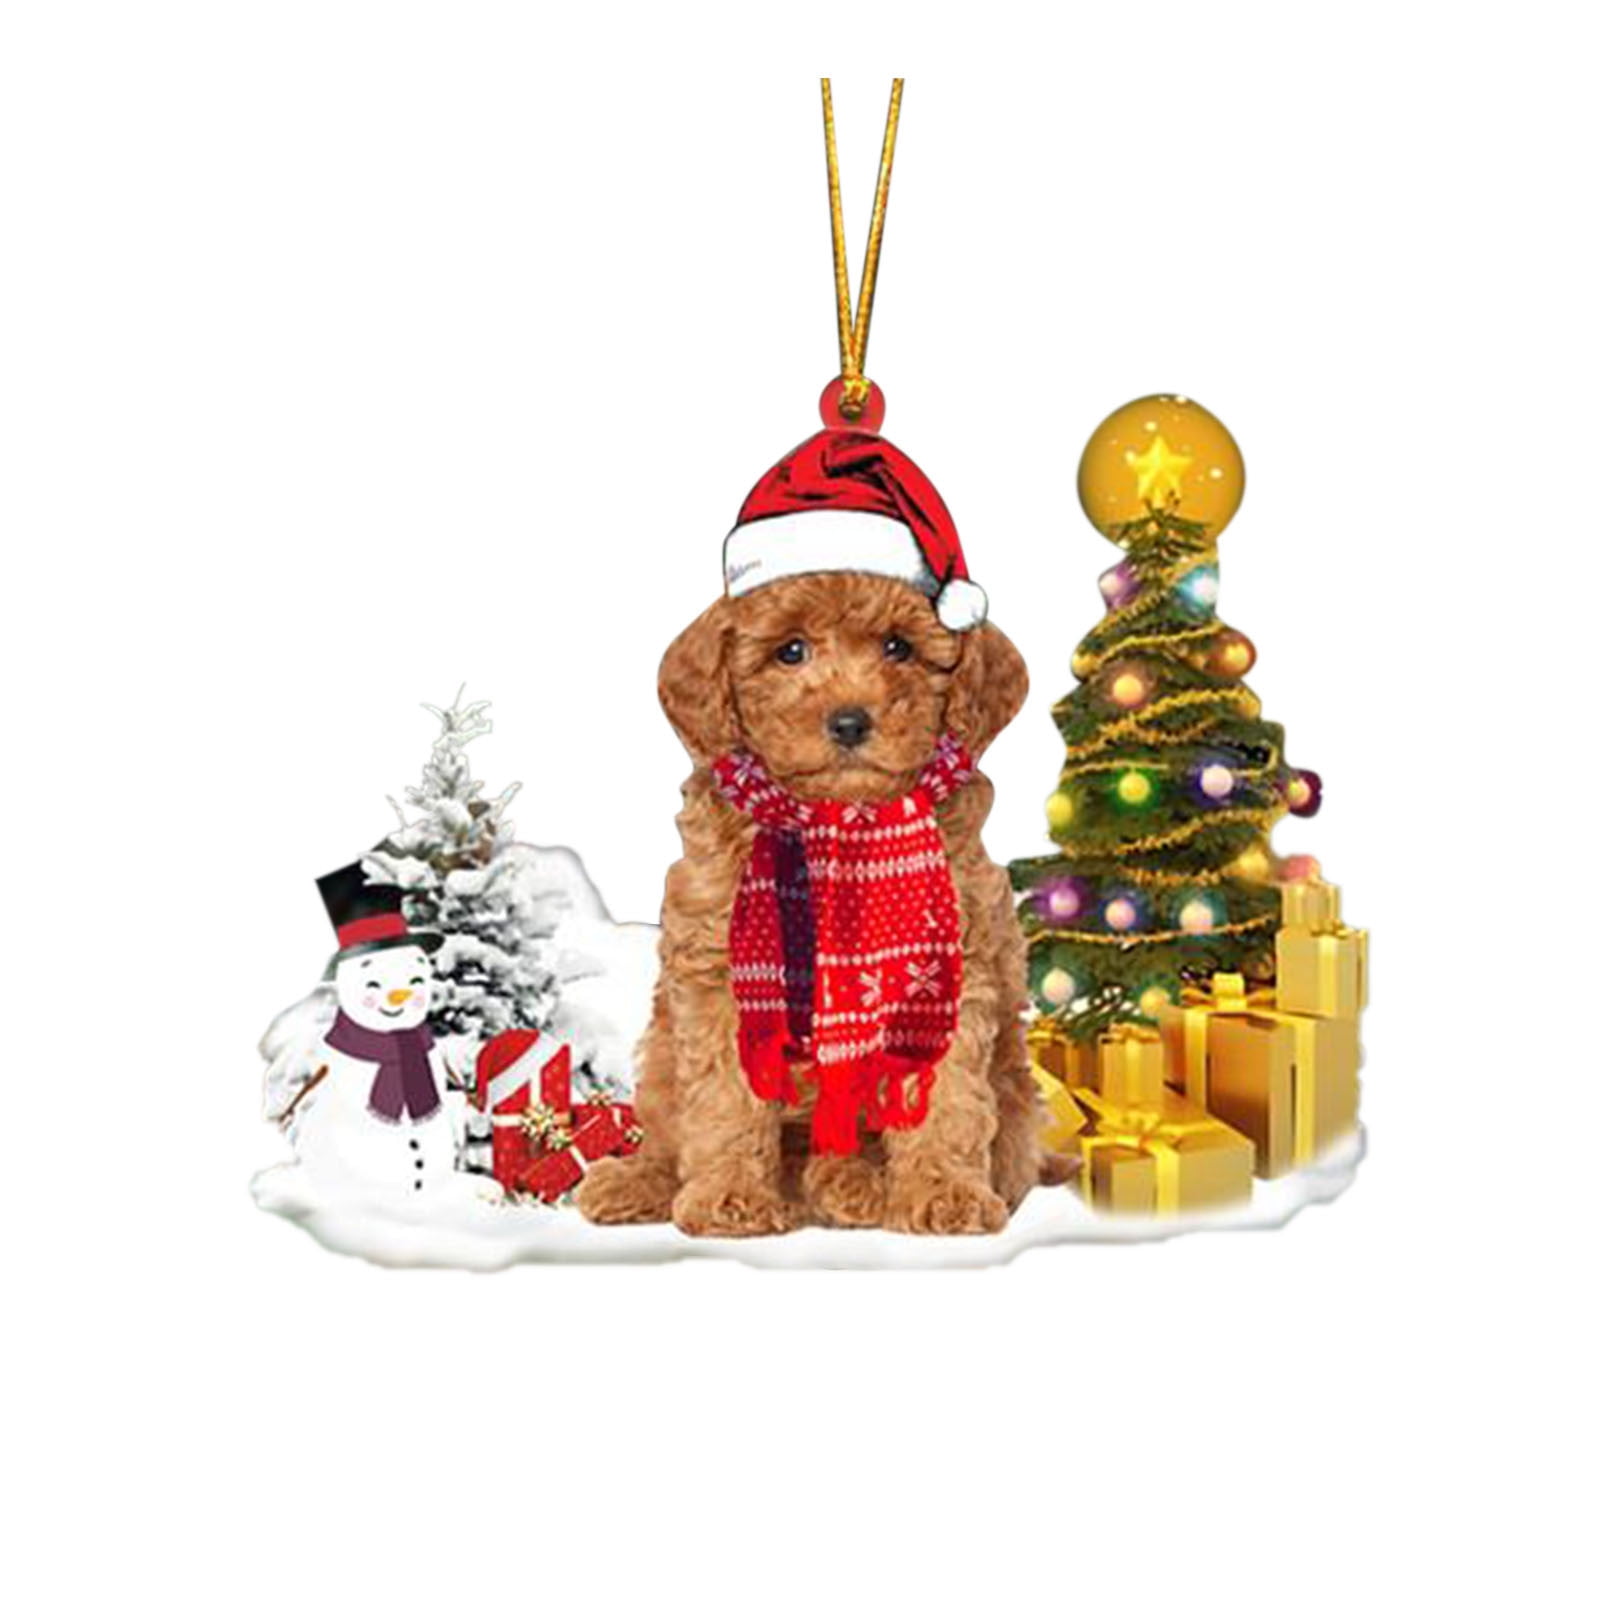 Black Golden Retriever Dog Puppy Christmas Tree Skirt,35.5 Tree Skirt for Xmas Decorations Holiday Decorations